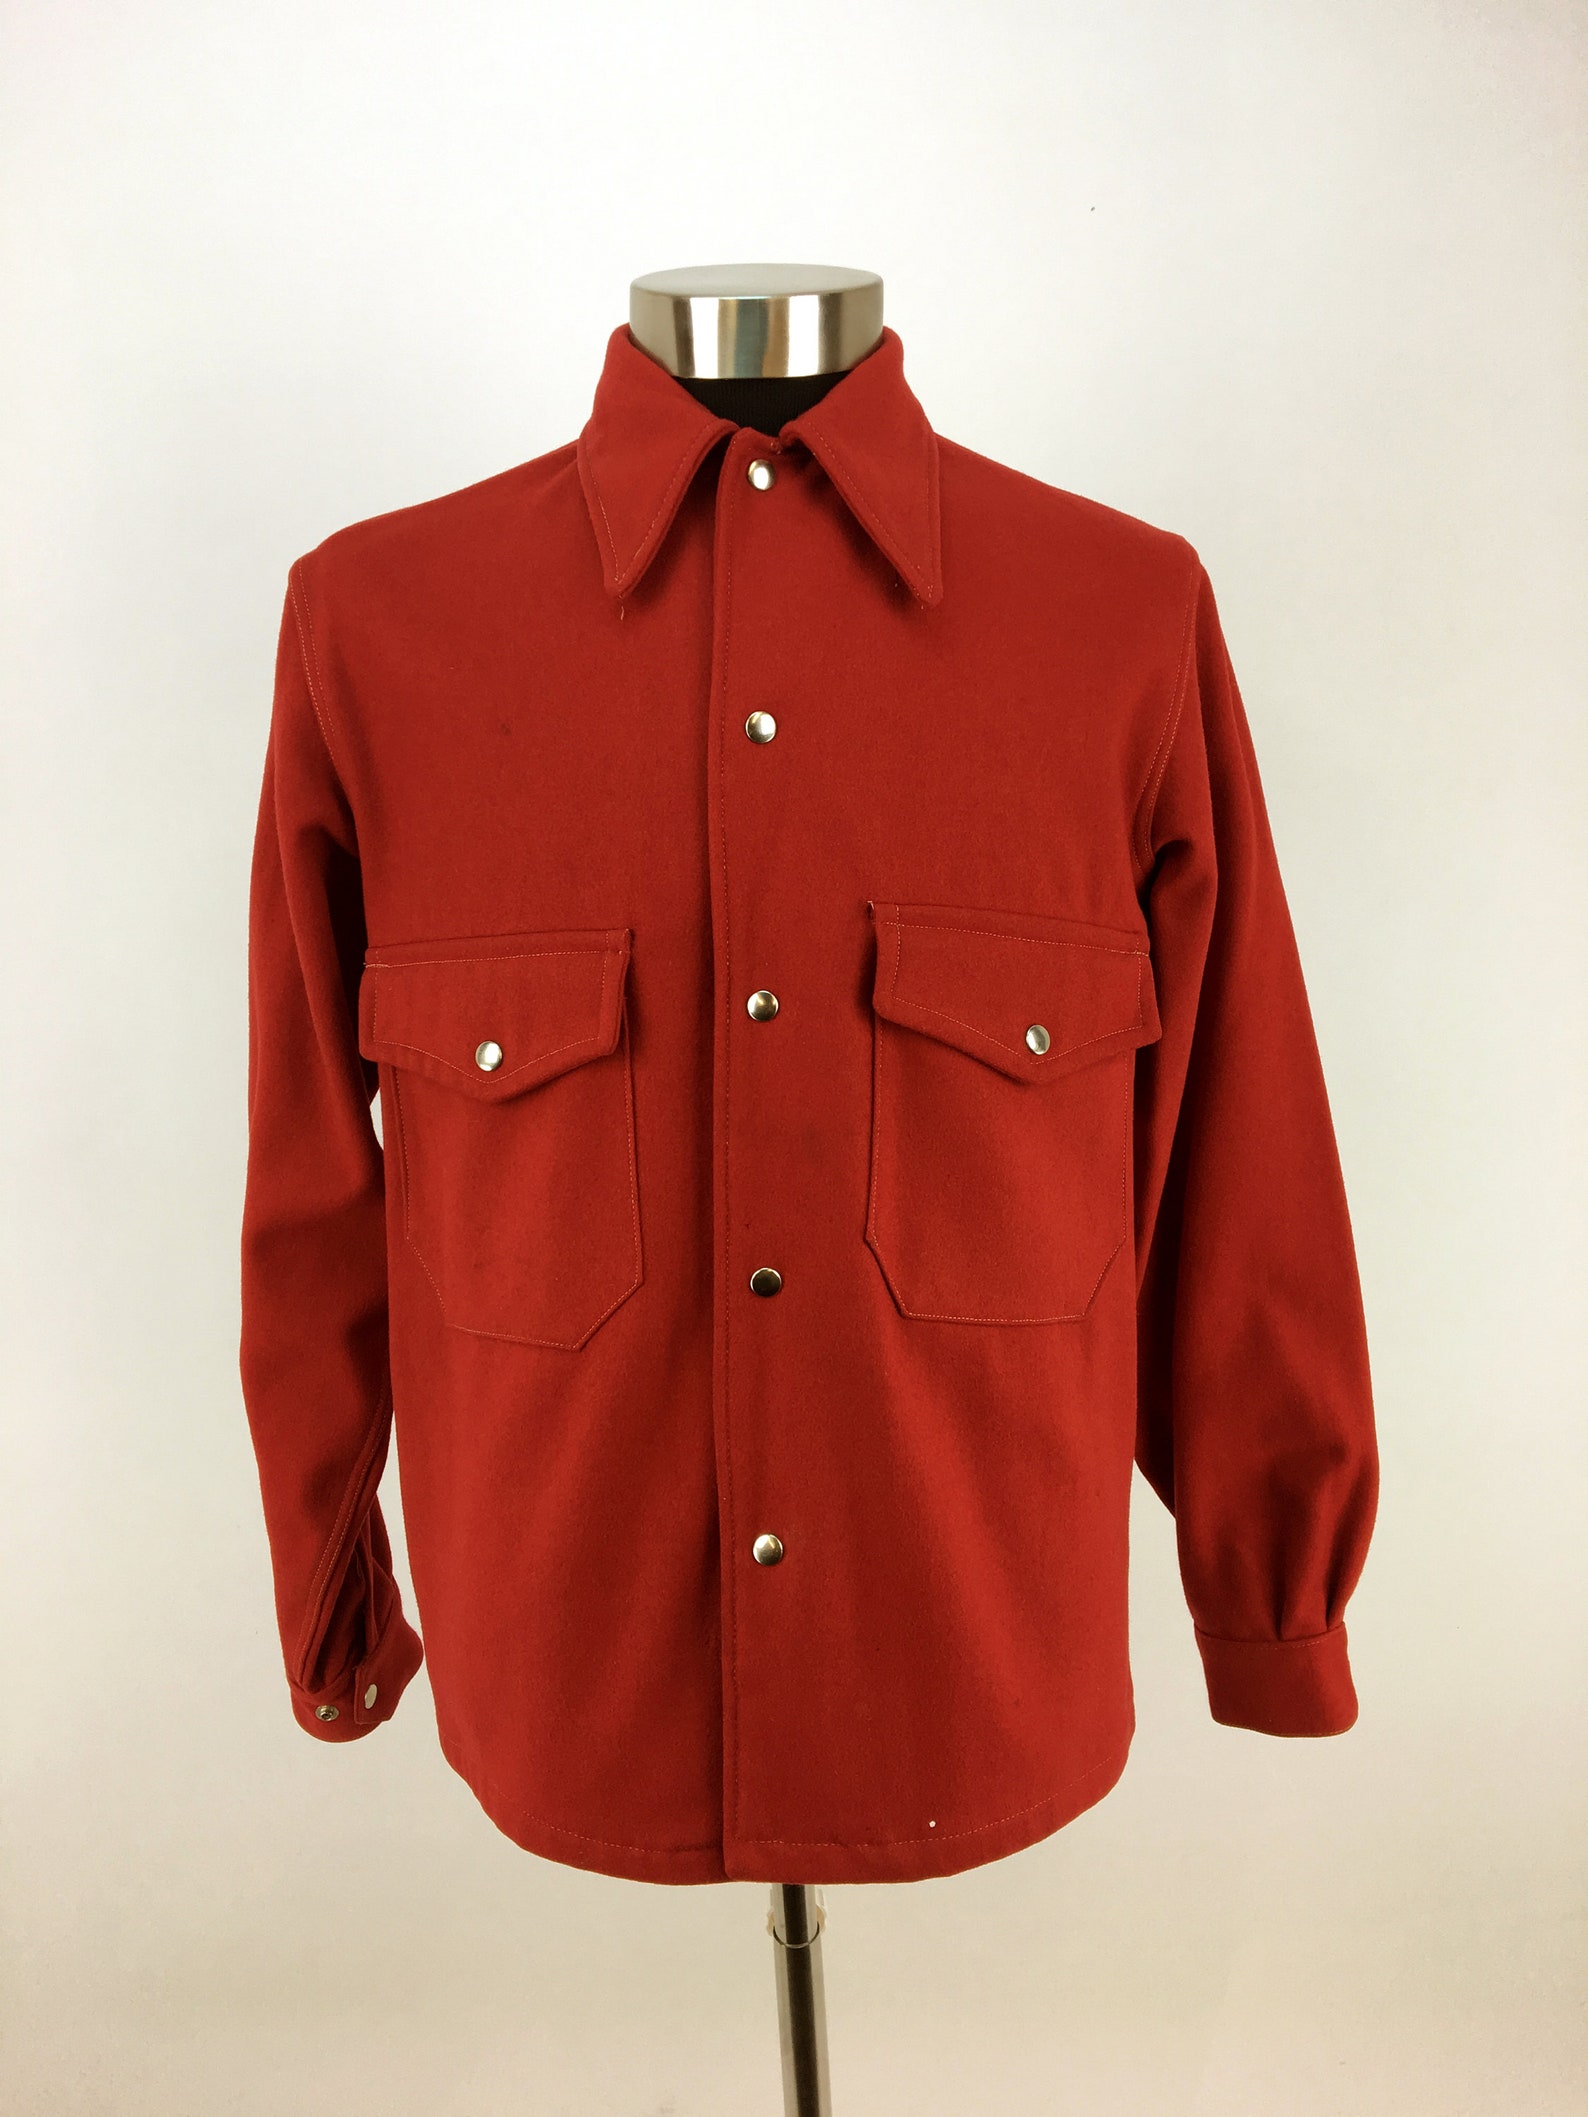 Vintage 40s 50s Red Wool Hunting Jacket by Gean Edwards MEDIUM | Etsy